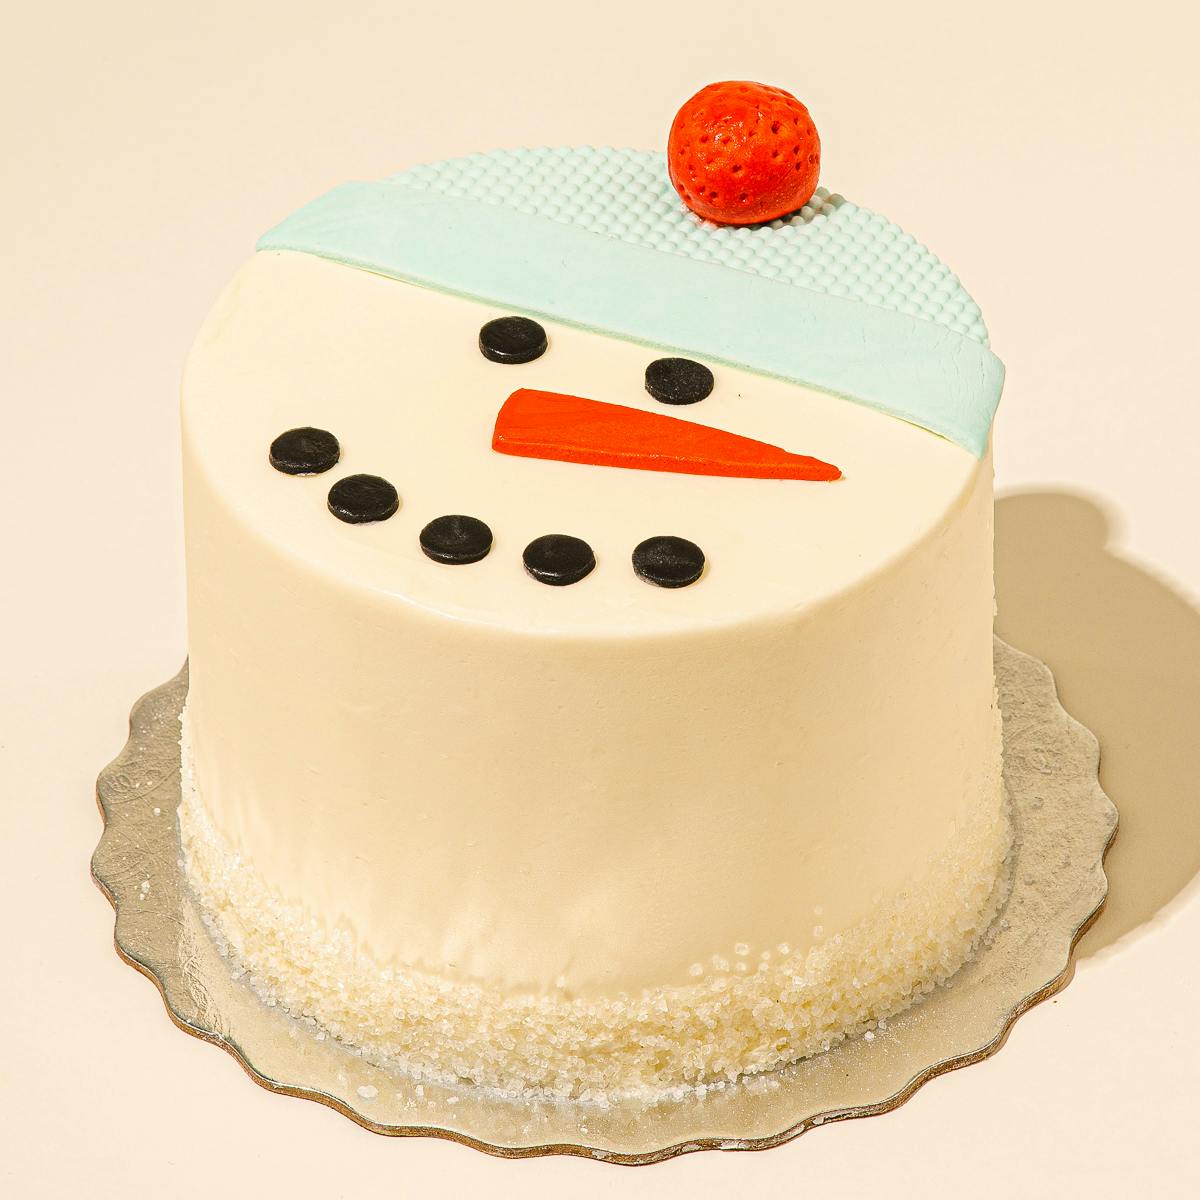 https://goldbelly.imgix.net/uploads/showcase_media_asset/image/150835/Duff-Holiday-Cakes-Snowman-Cake-10.21.21-71-72ppi-1x1.jpg?ixlib=rails-3.0.2